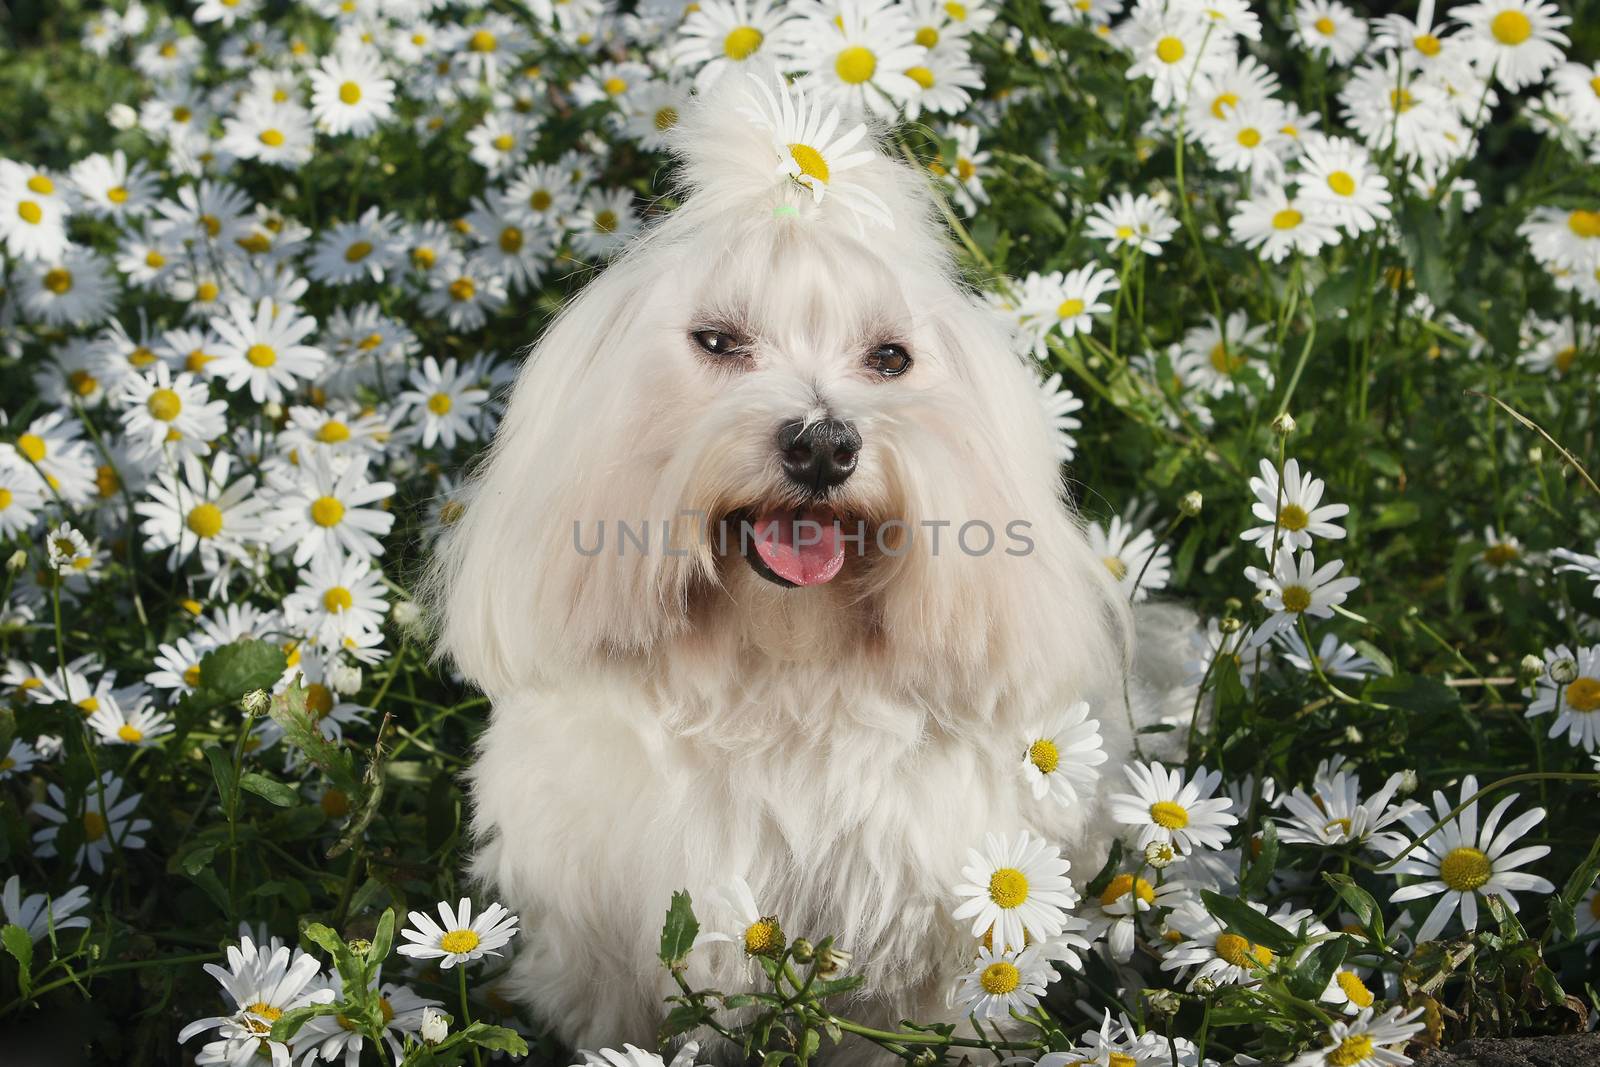 White dog in the garden - Bichon Maltese Maltese Dog Breed